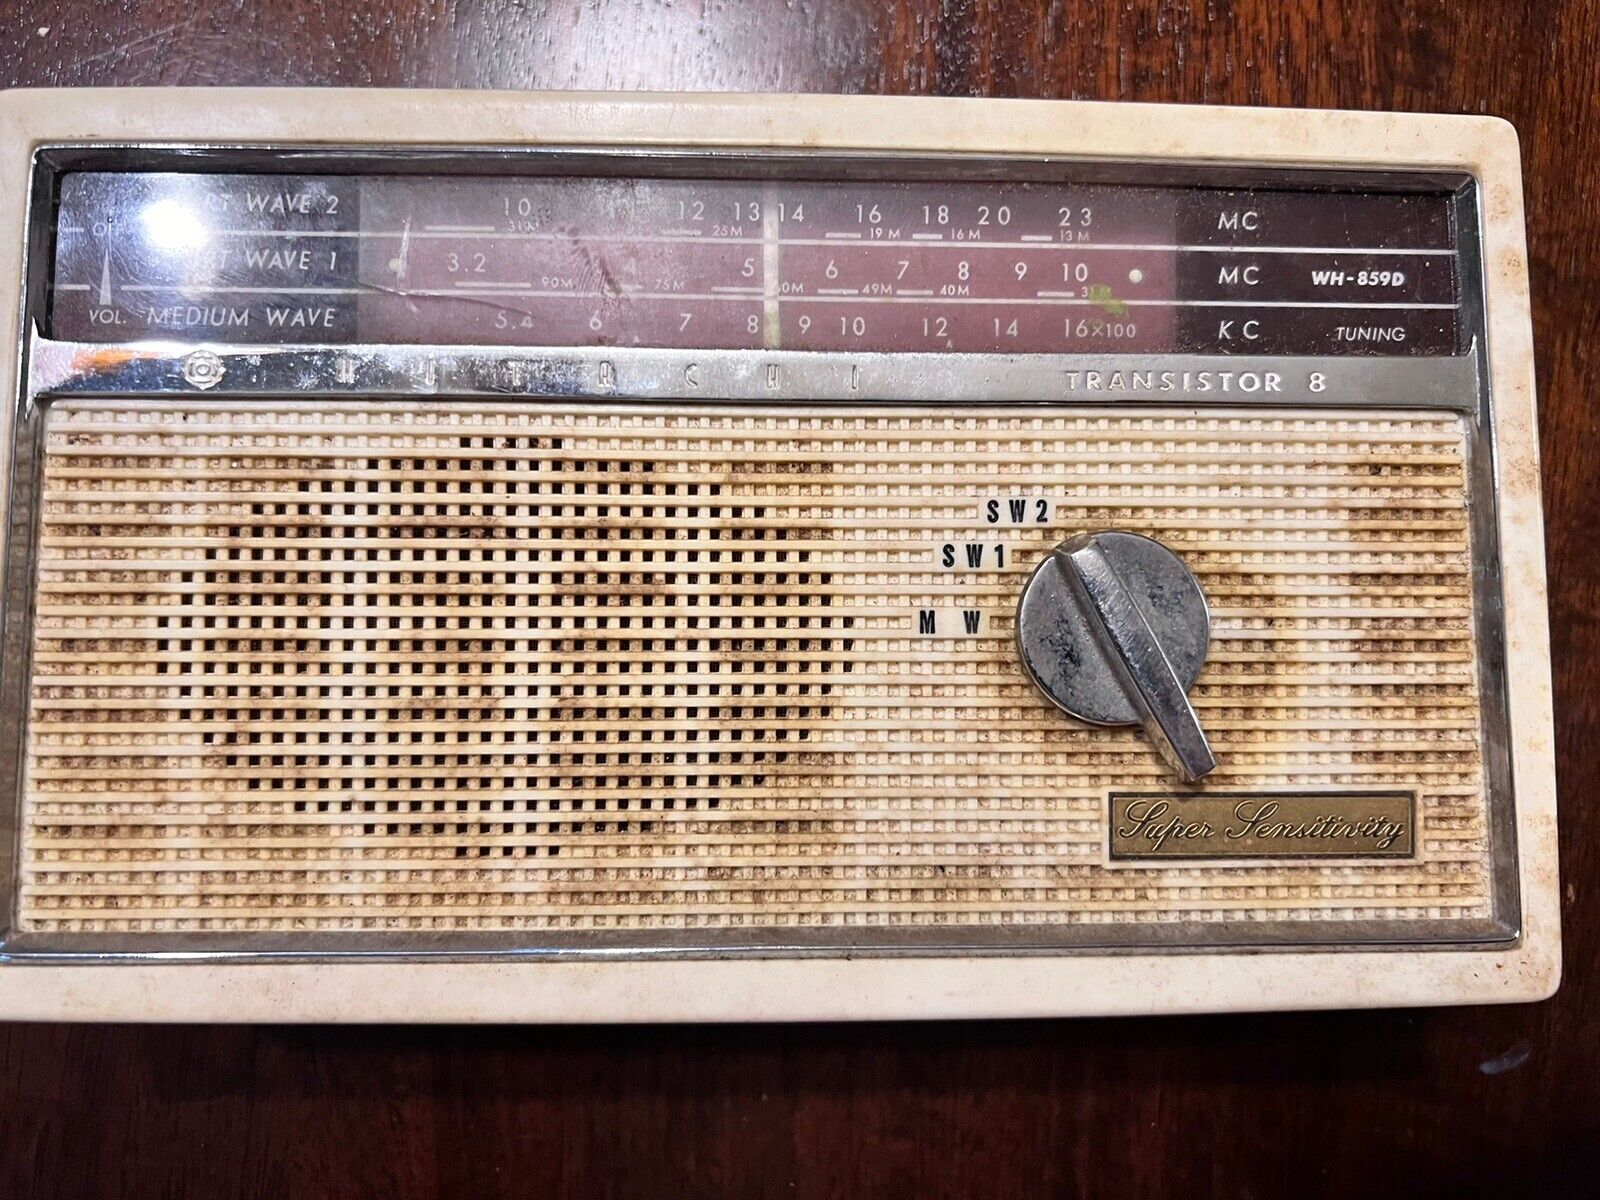 Vintage Hitachi Transistor 8 Radio with Leather Case